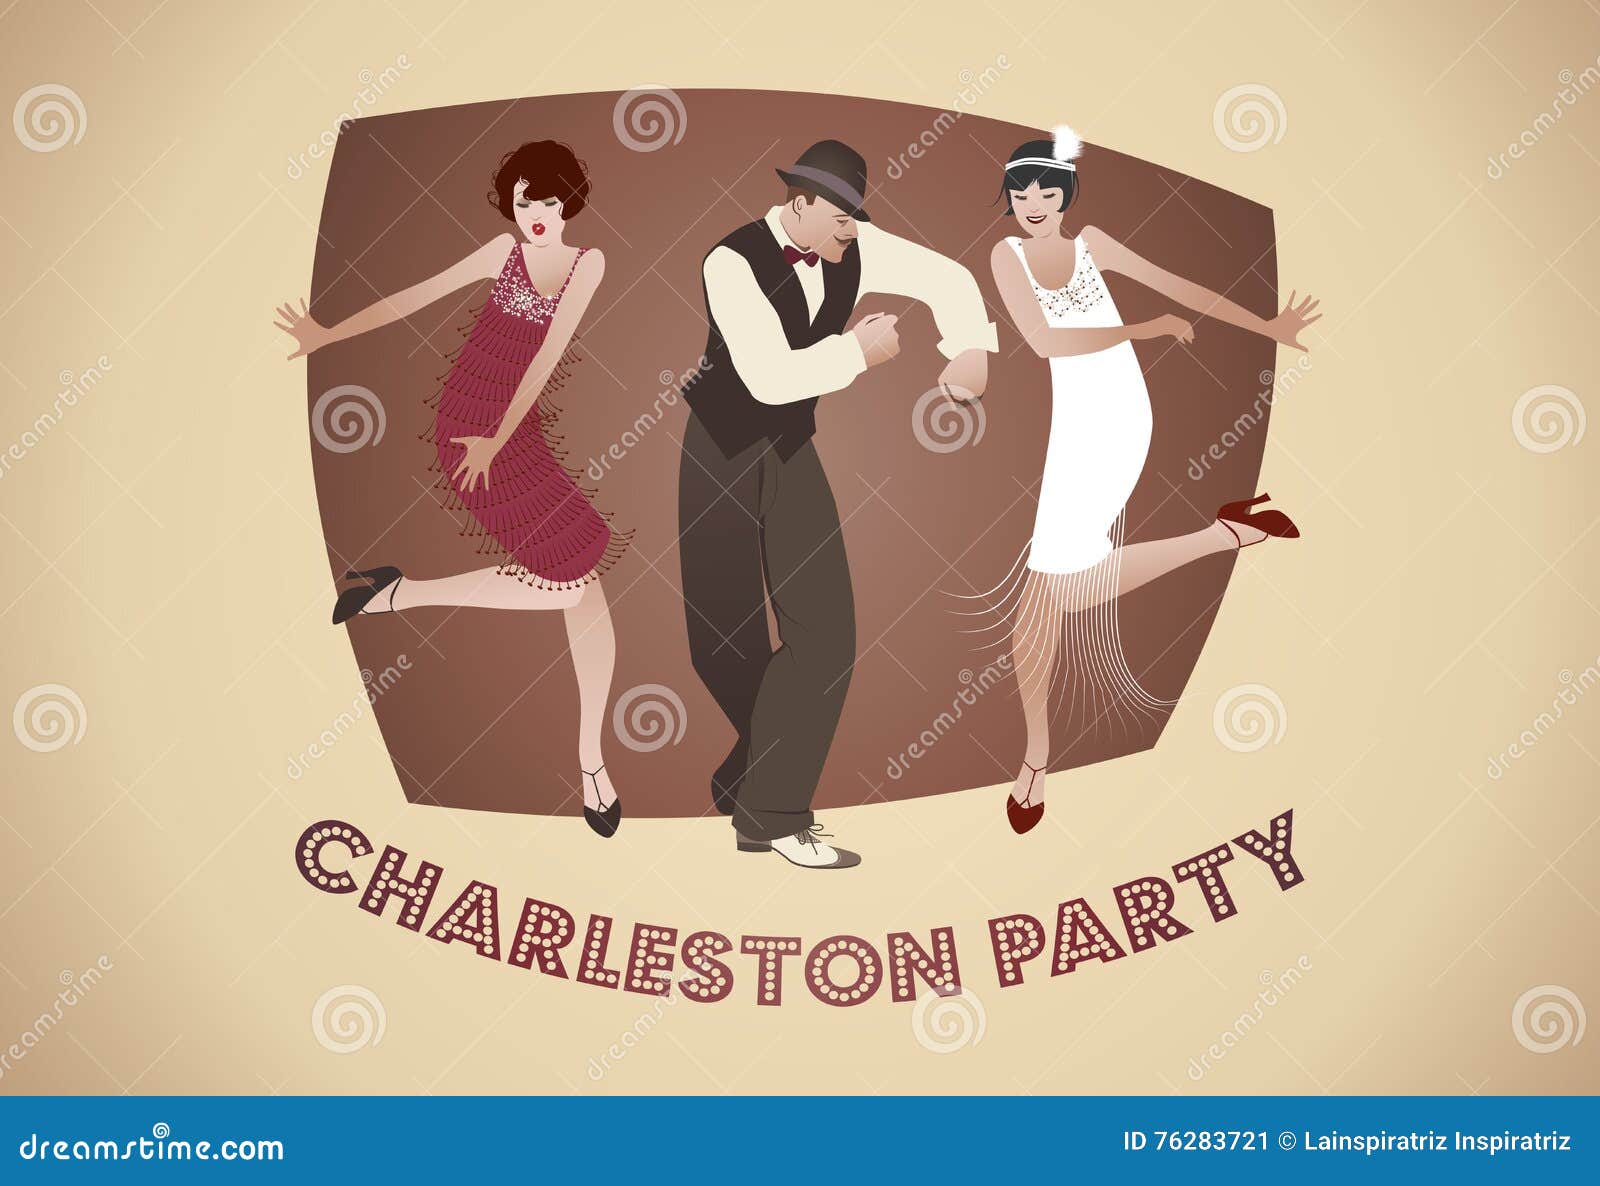 charleston party: man and funny girls dancing charleston.